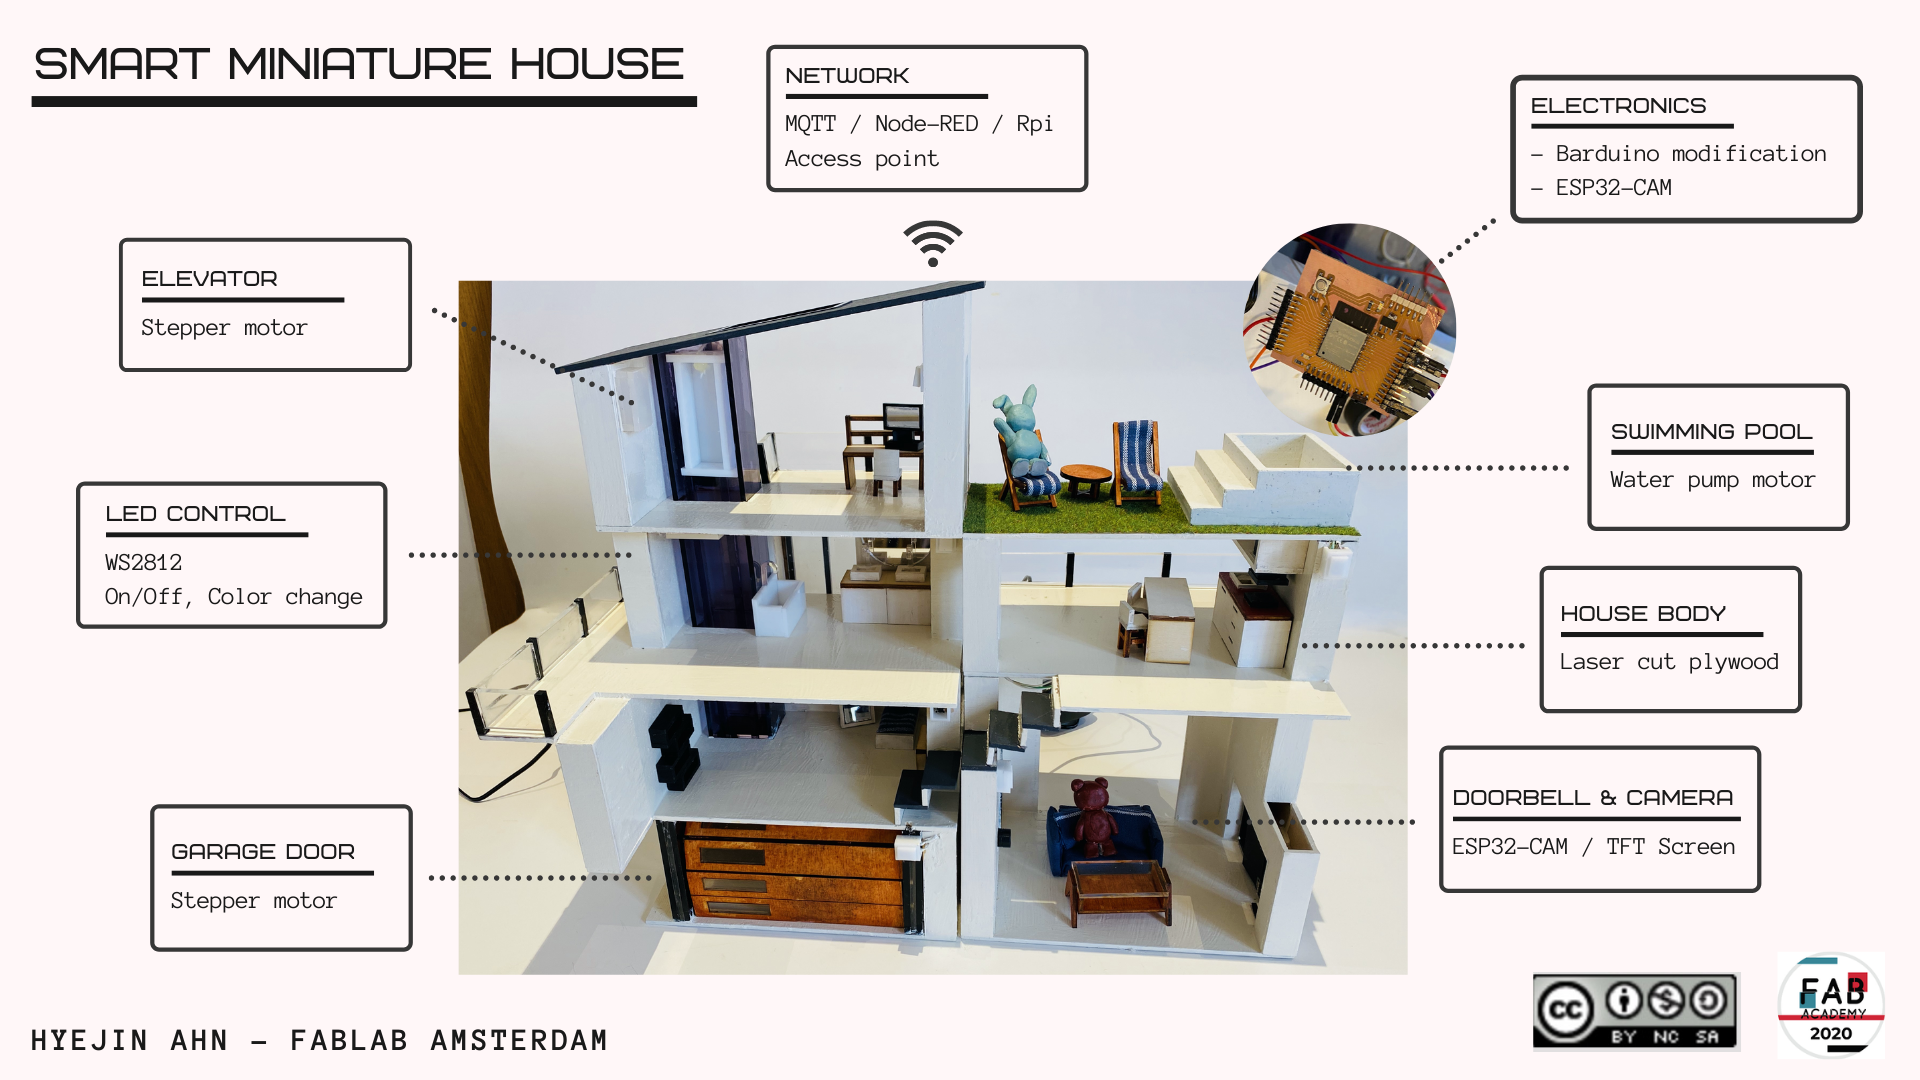 Smart miniature house, by Hyejin Ahn